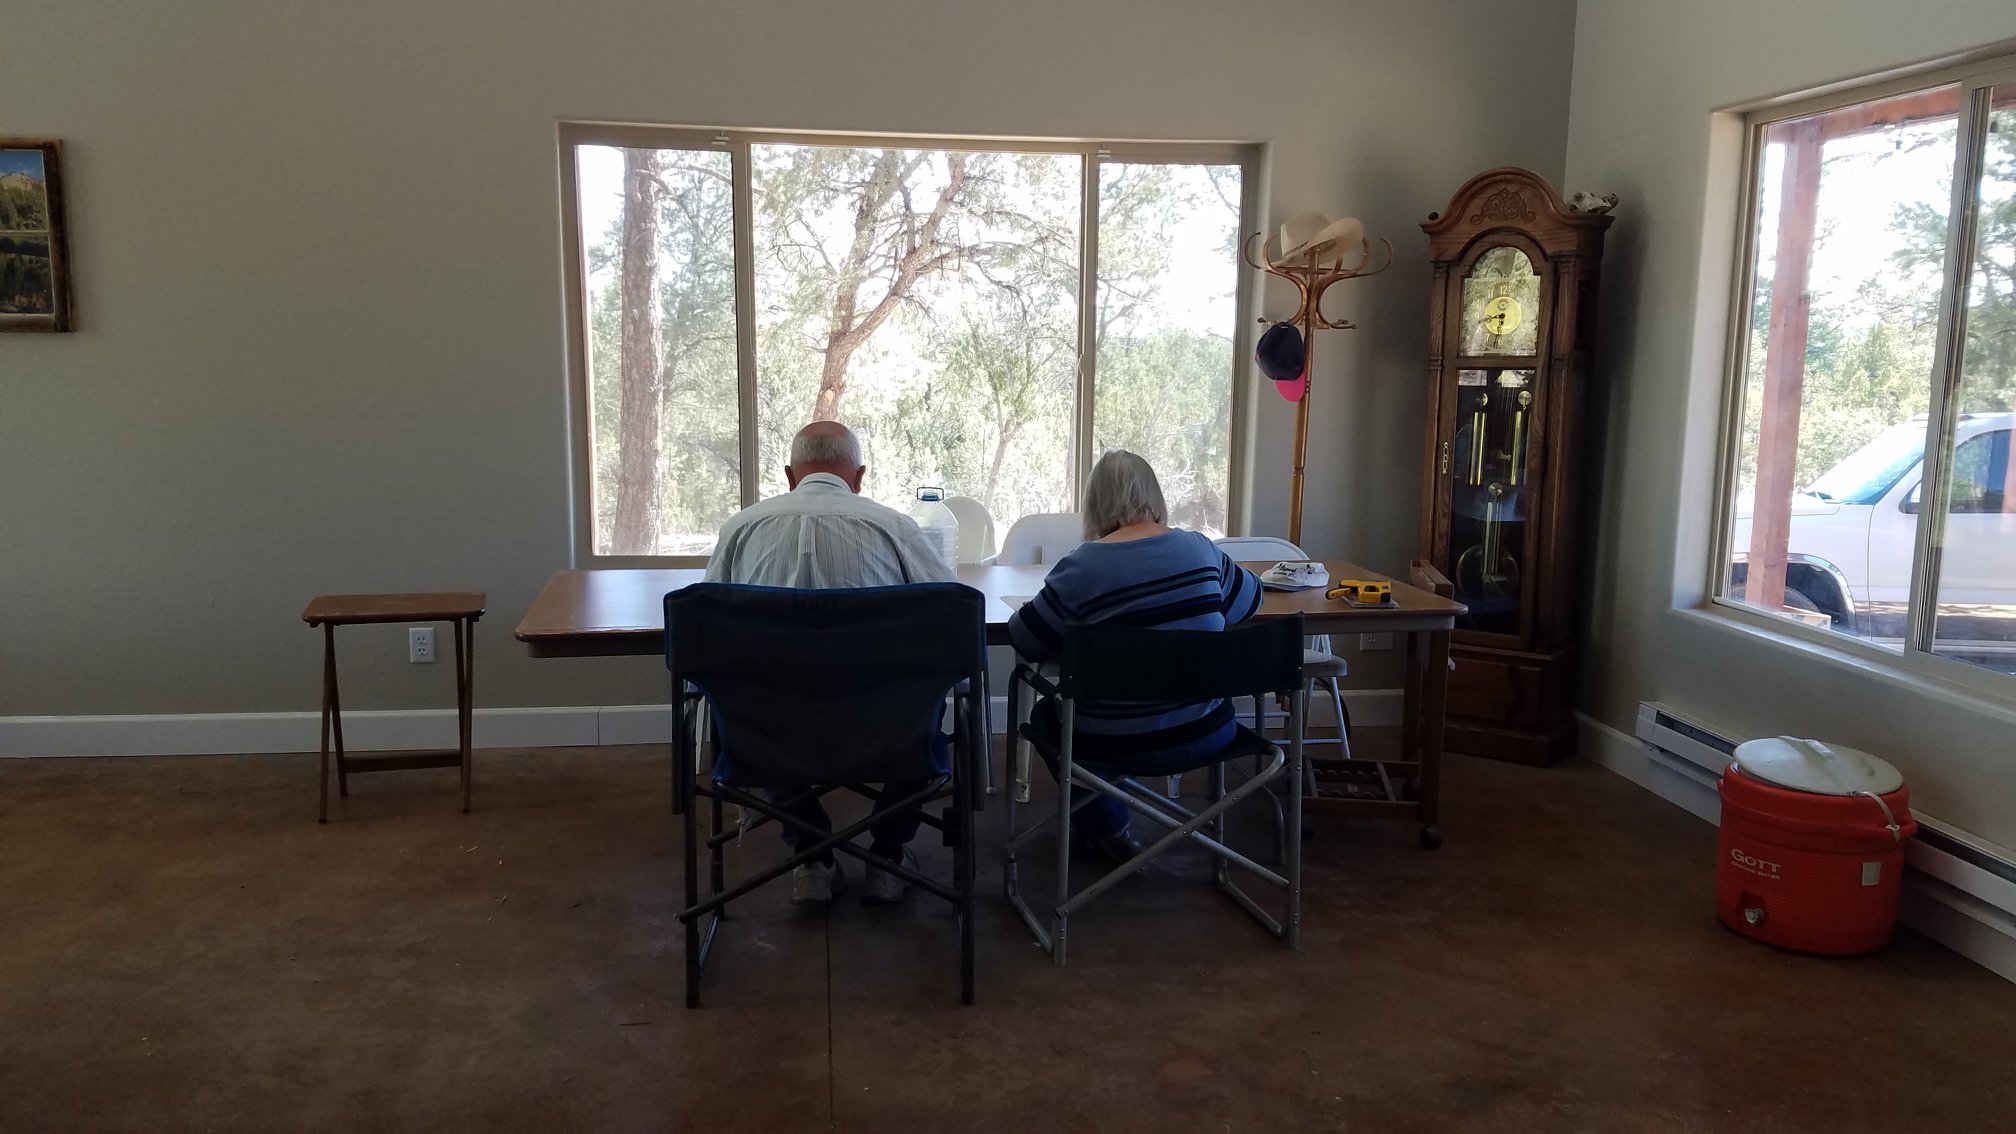 Grandma and Grandpa having a peaceful lunch together.